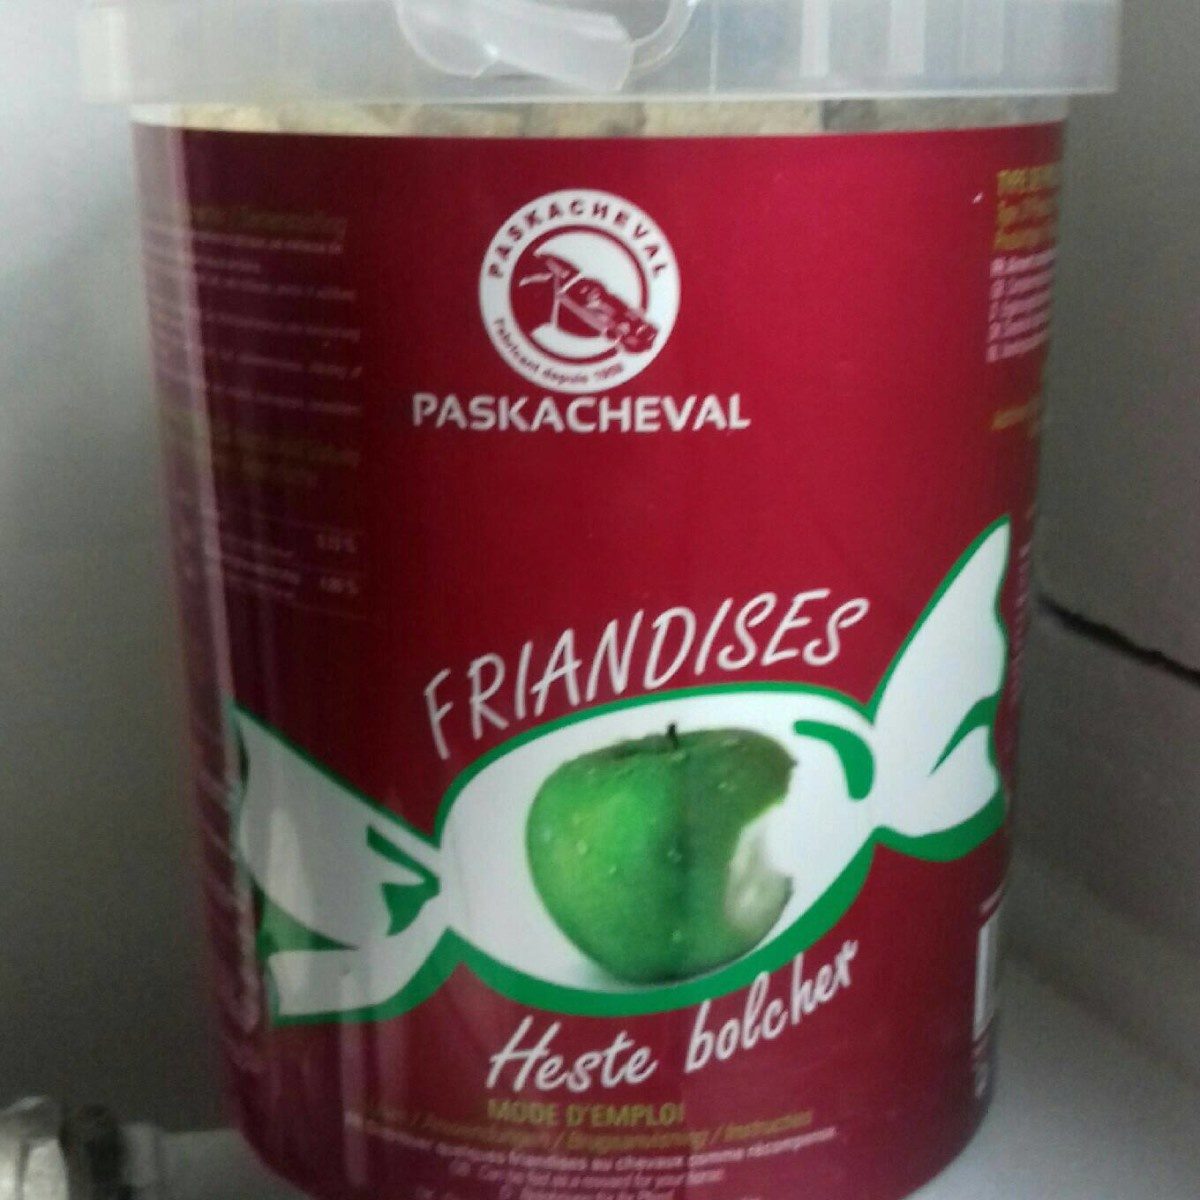 Friandises - Product - fr